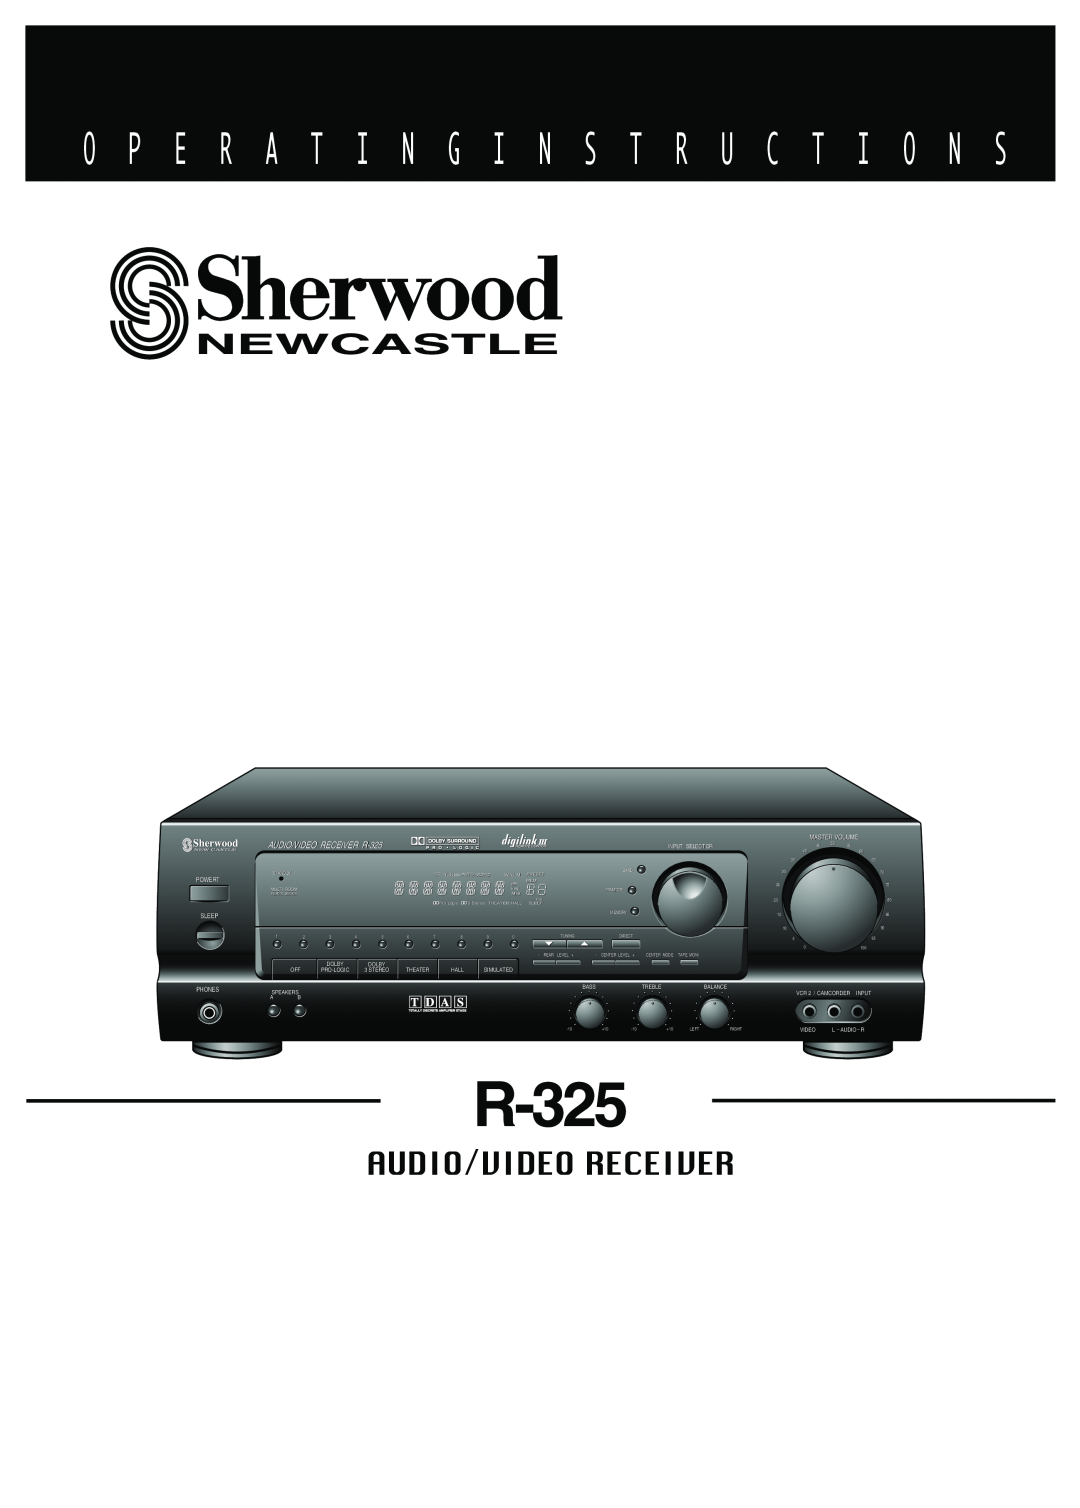 Sherwood R-325 operating instructions O P E R A T I N G I N S T R U C T I O N S, Audio/Video Receiver, Master Volume 